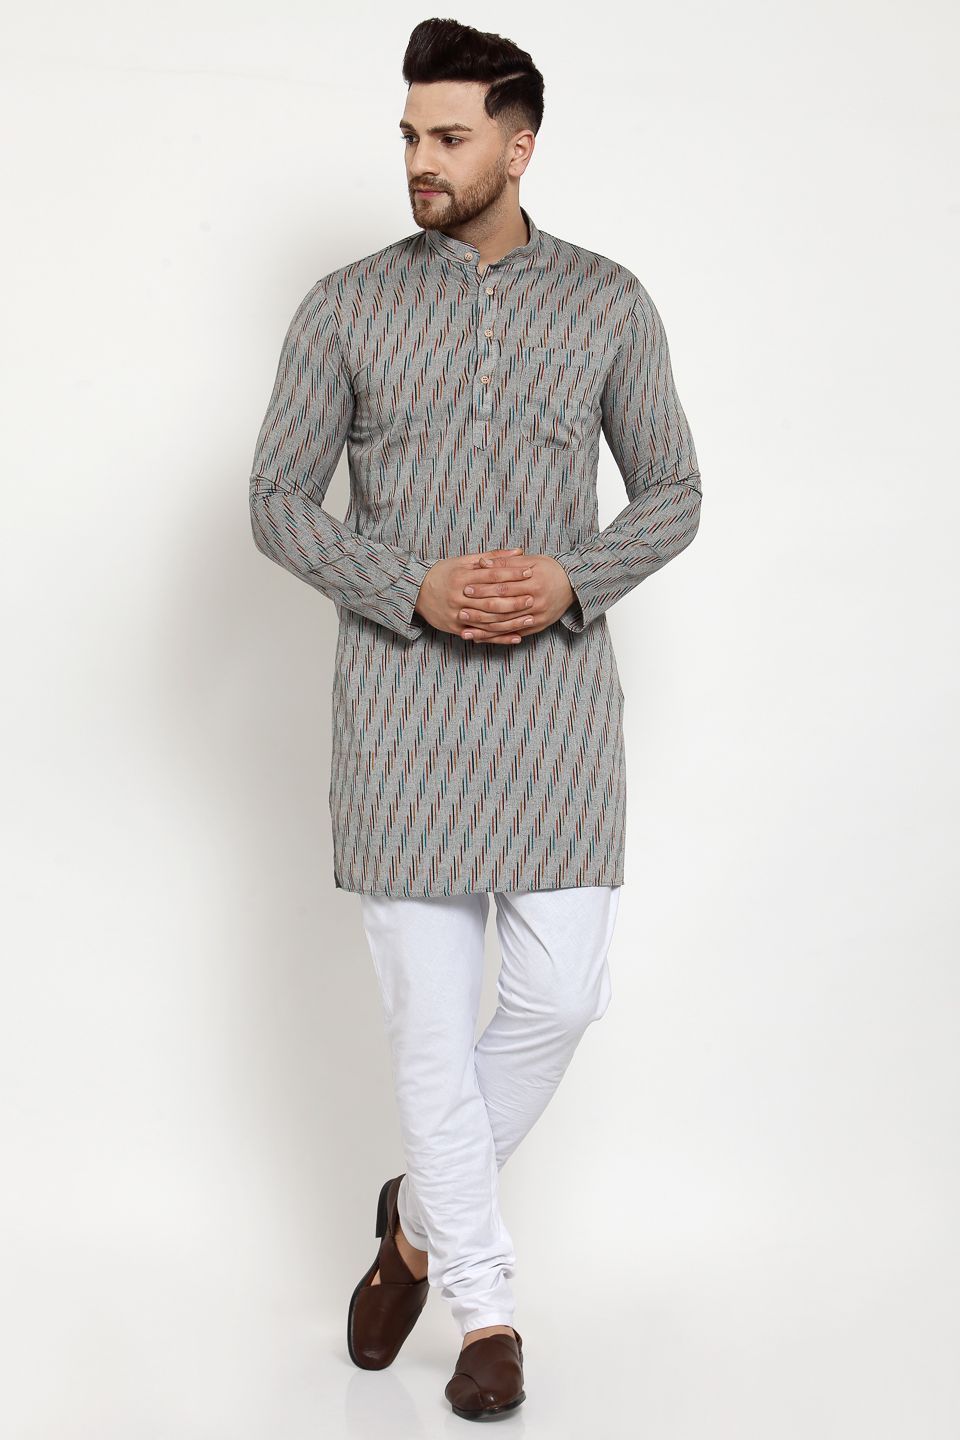 WINTAGE Men's Jaipur Cotton Festive and Casual Long Indian Kurta Sleepset: Grey